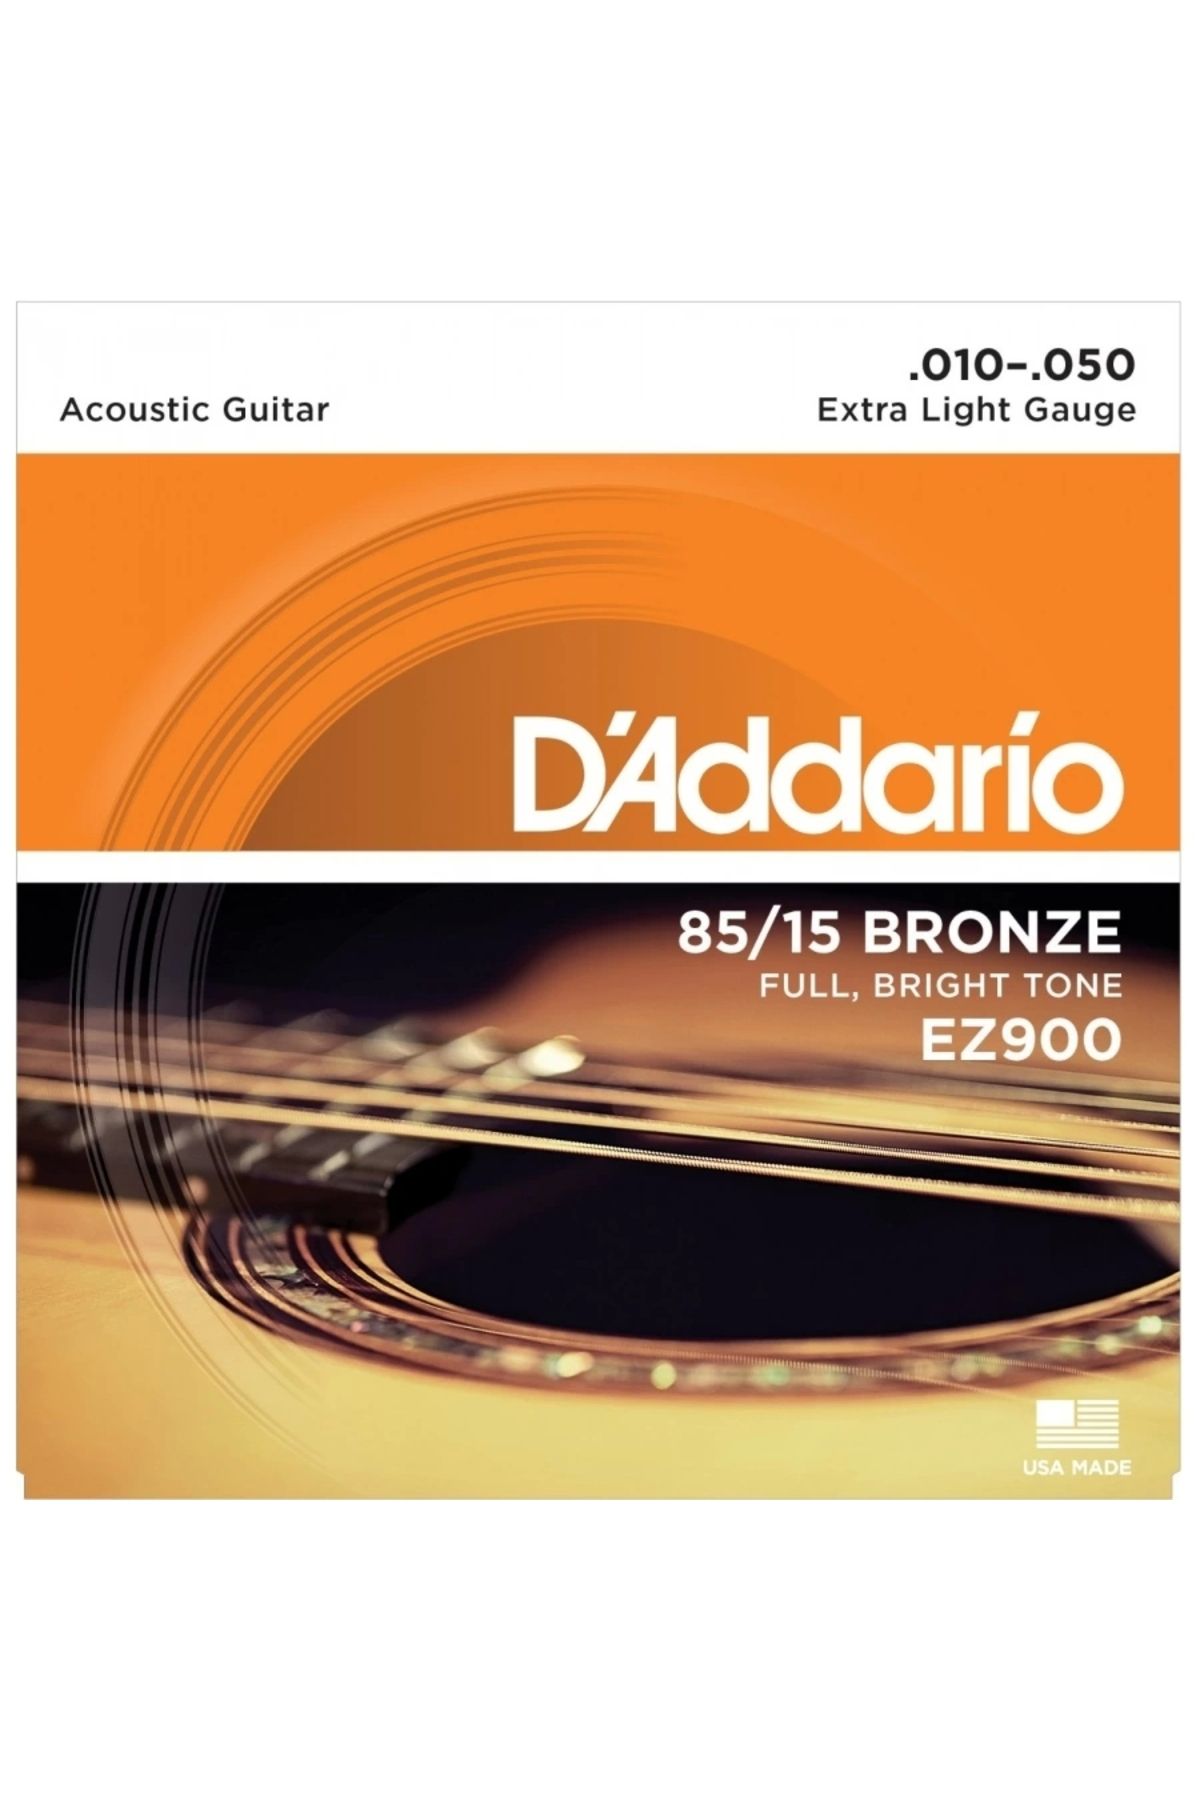 D'Addario D'addario Ez900 85/15 Bronz Akustik Gitar Teli (10-50)